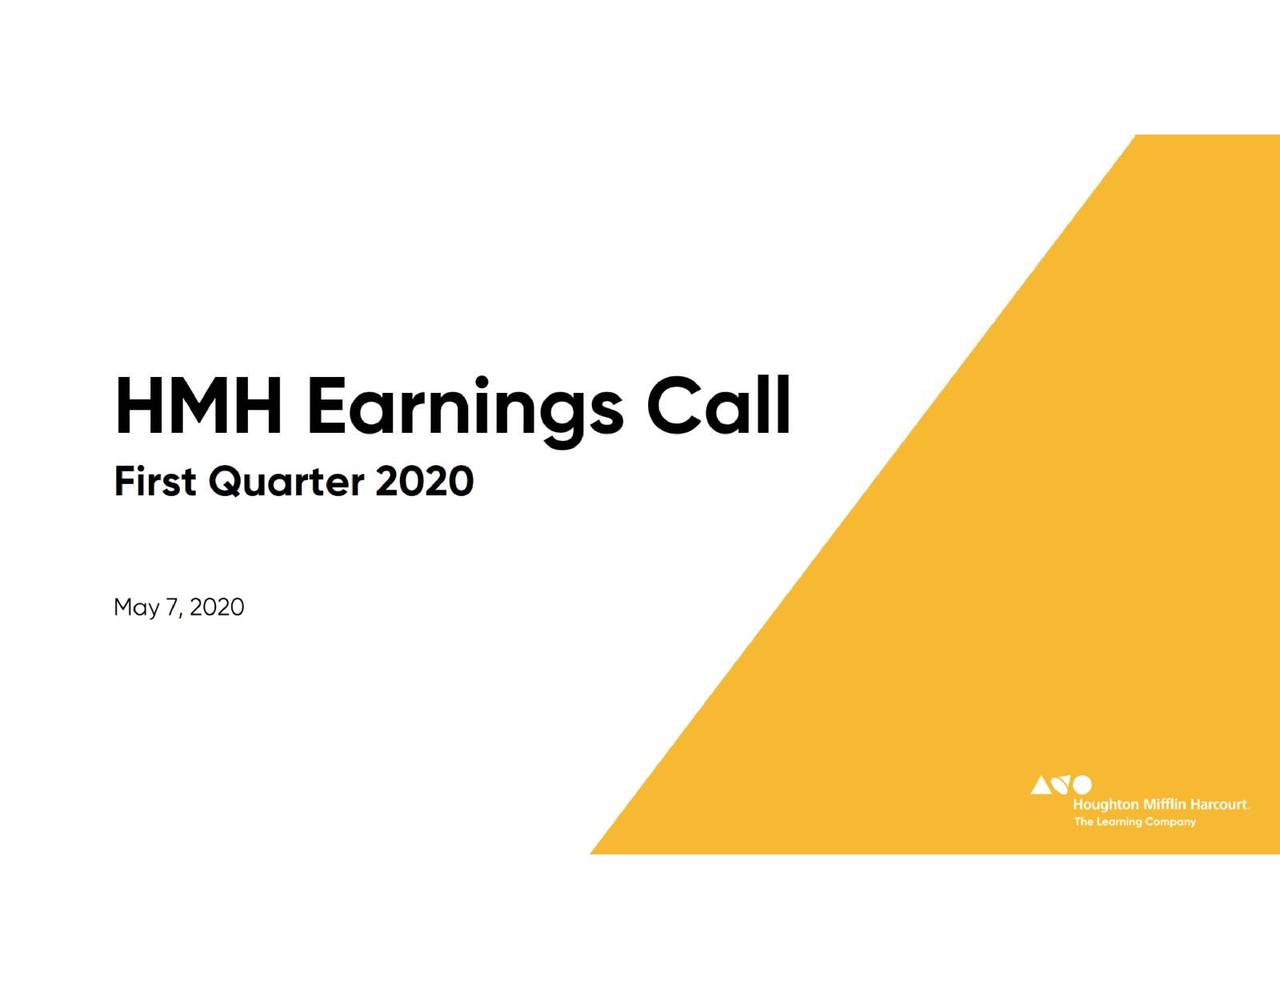 houghton-mifflin-harcourt-company-2020-q1-results-earnings-call-presentation-nasdaq-hmhc